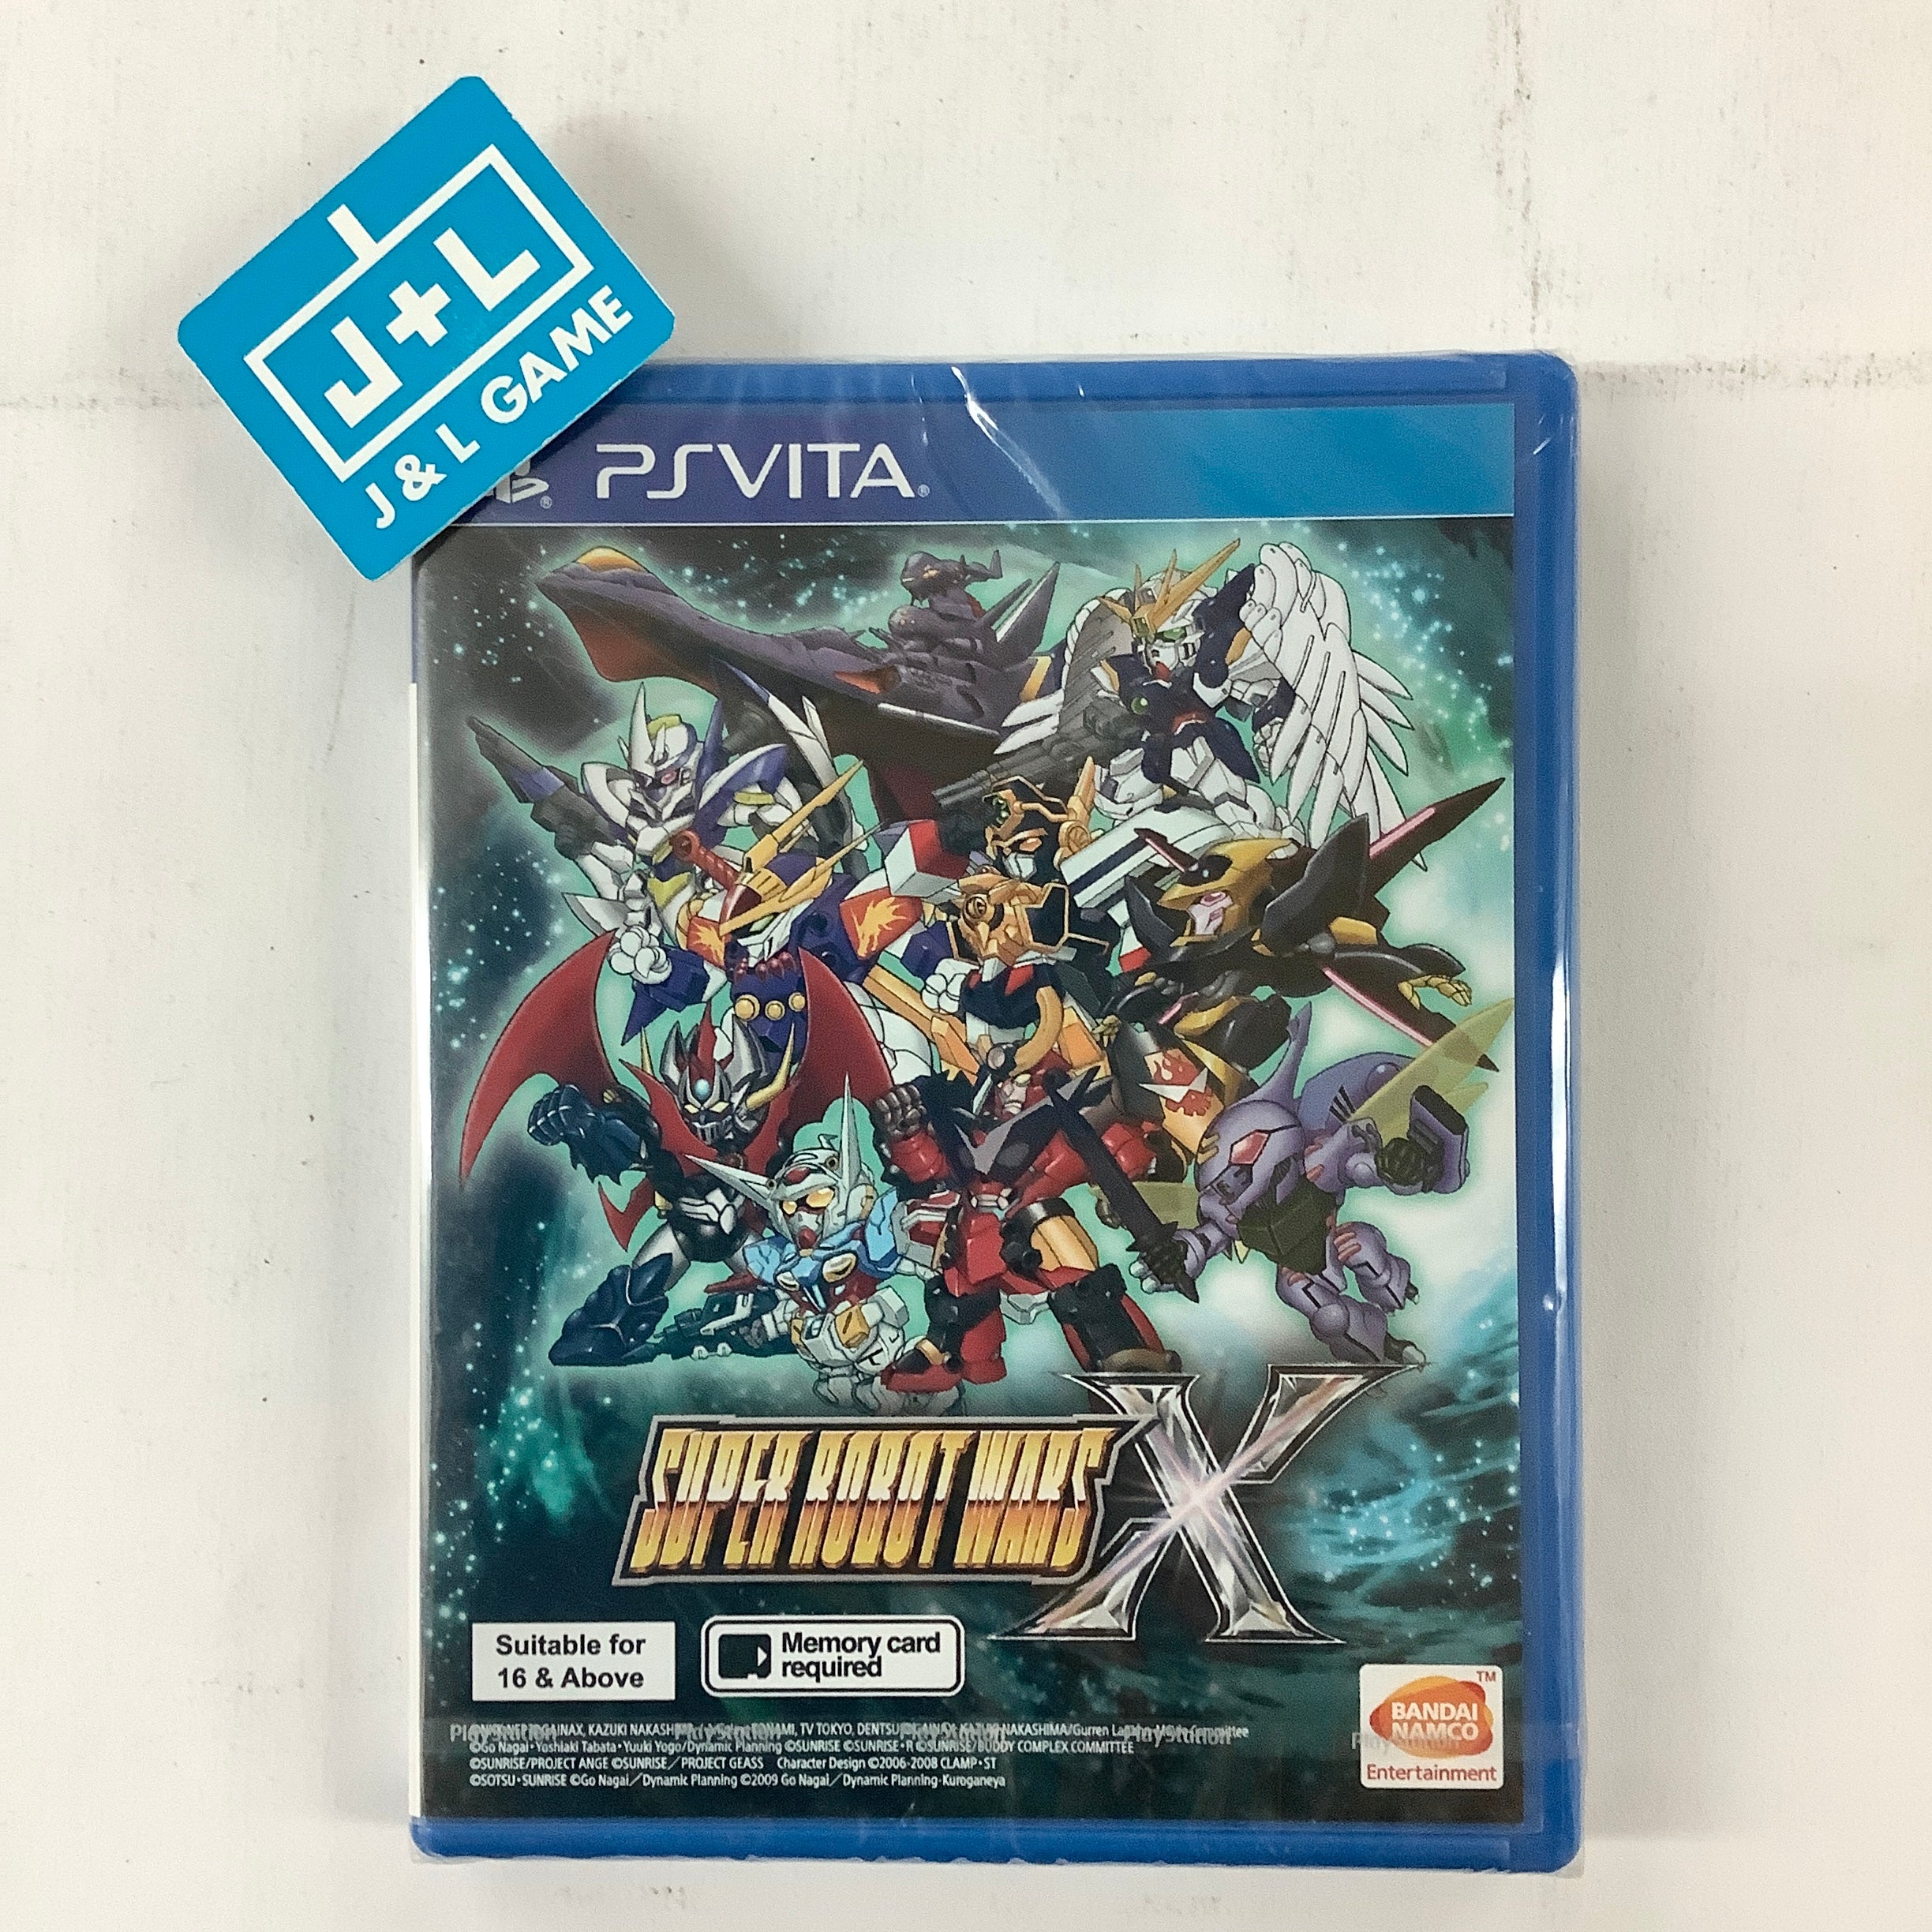 Super Robot Wars X (English Sub) - (PSV) PlayStation Vita (Japanese Import) Software J&L Video Games New York City   